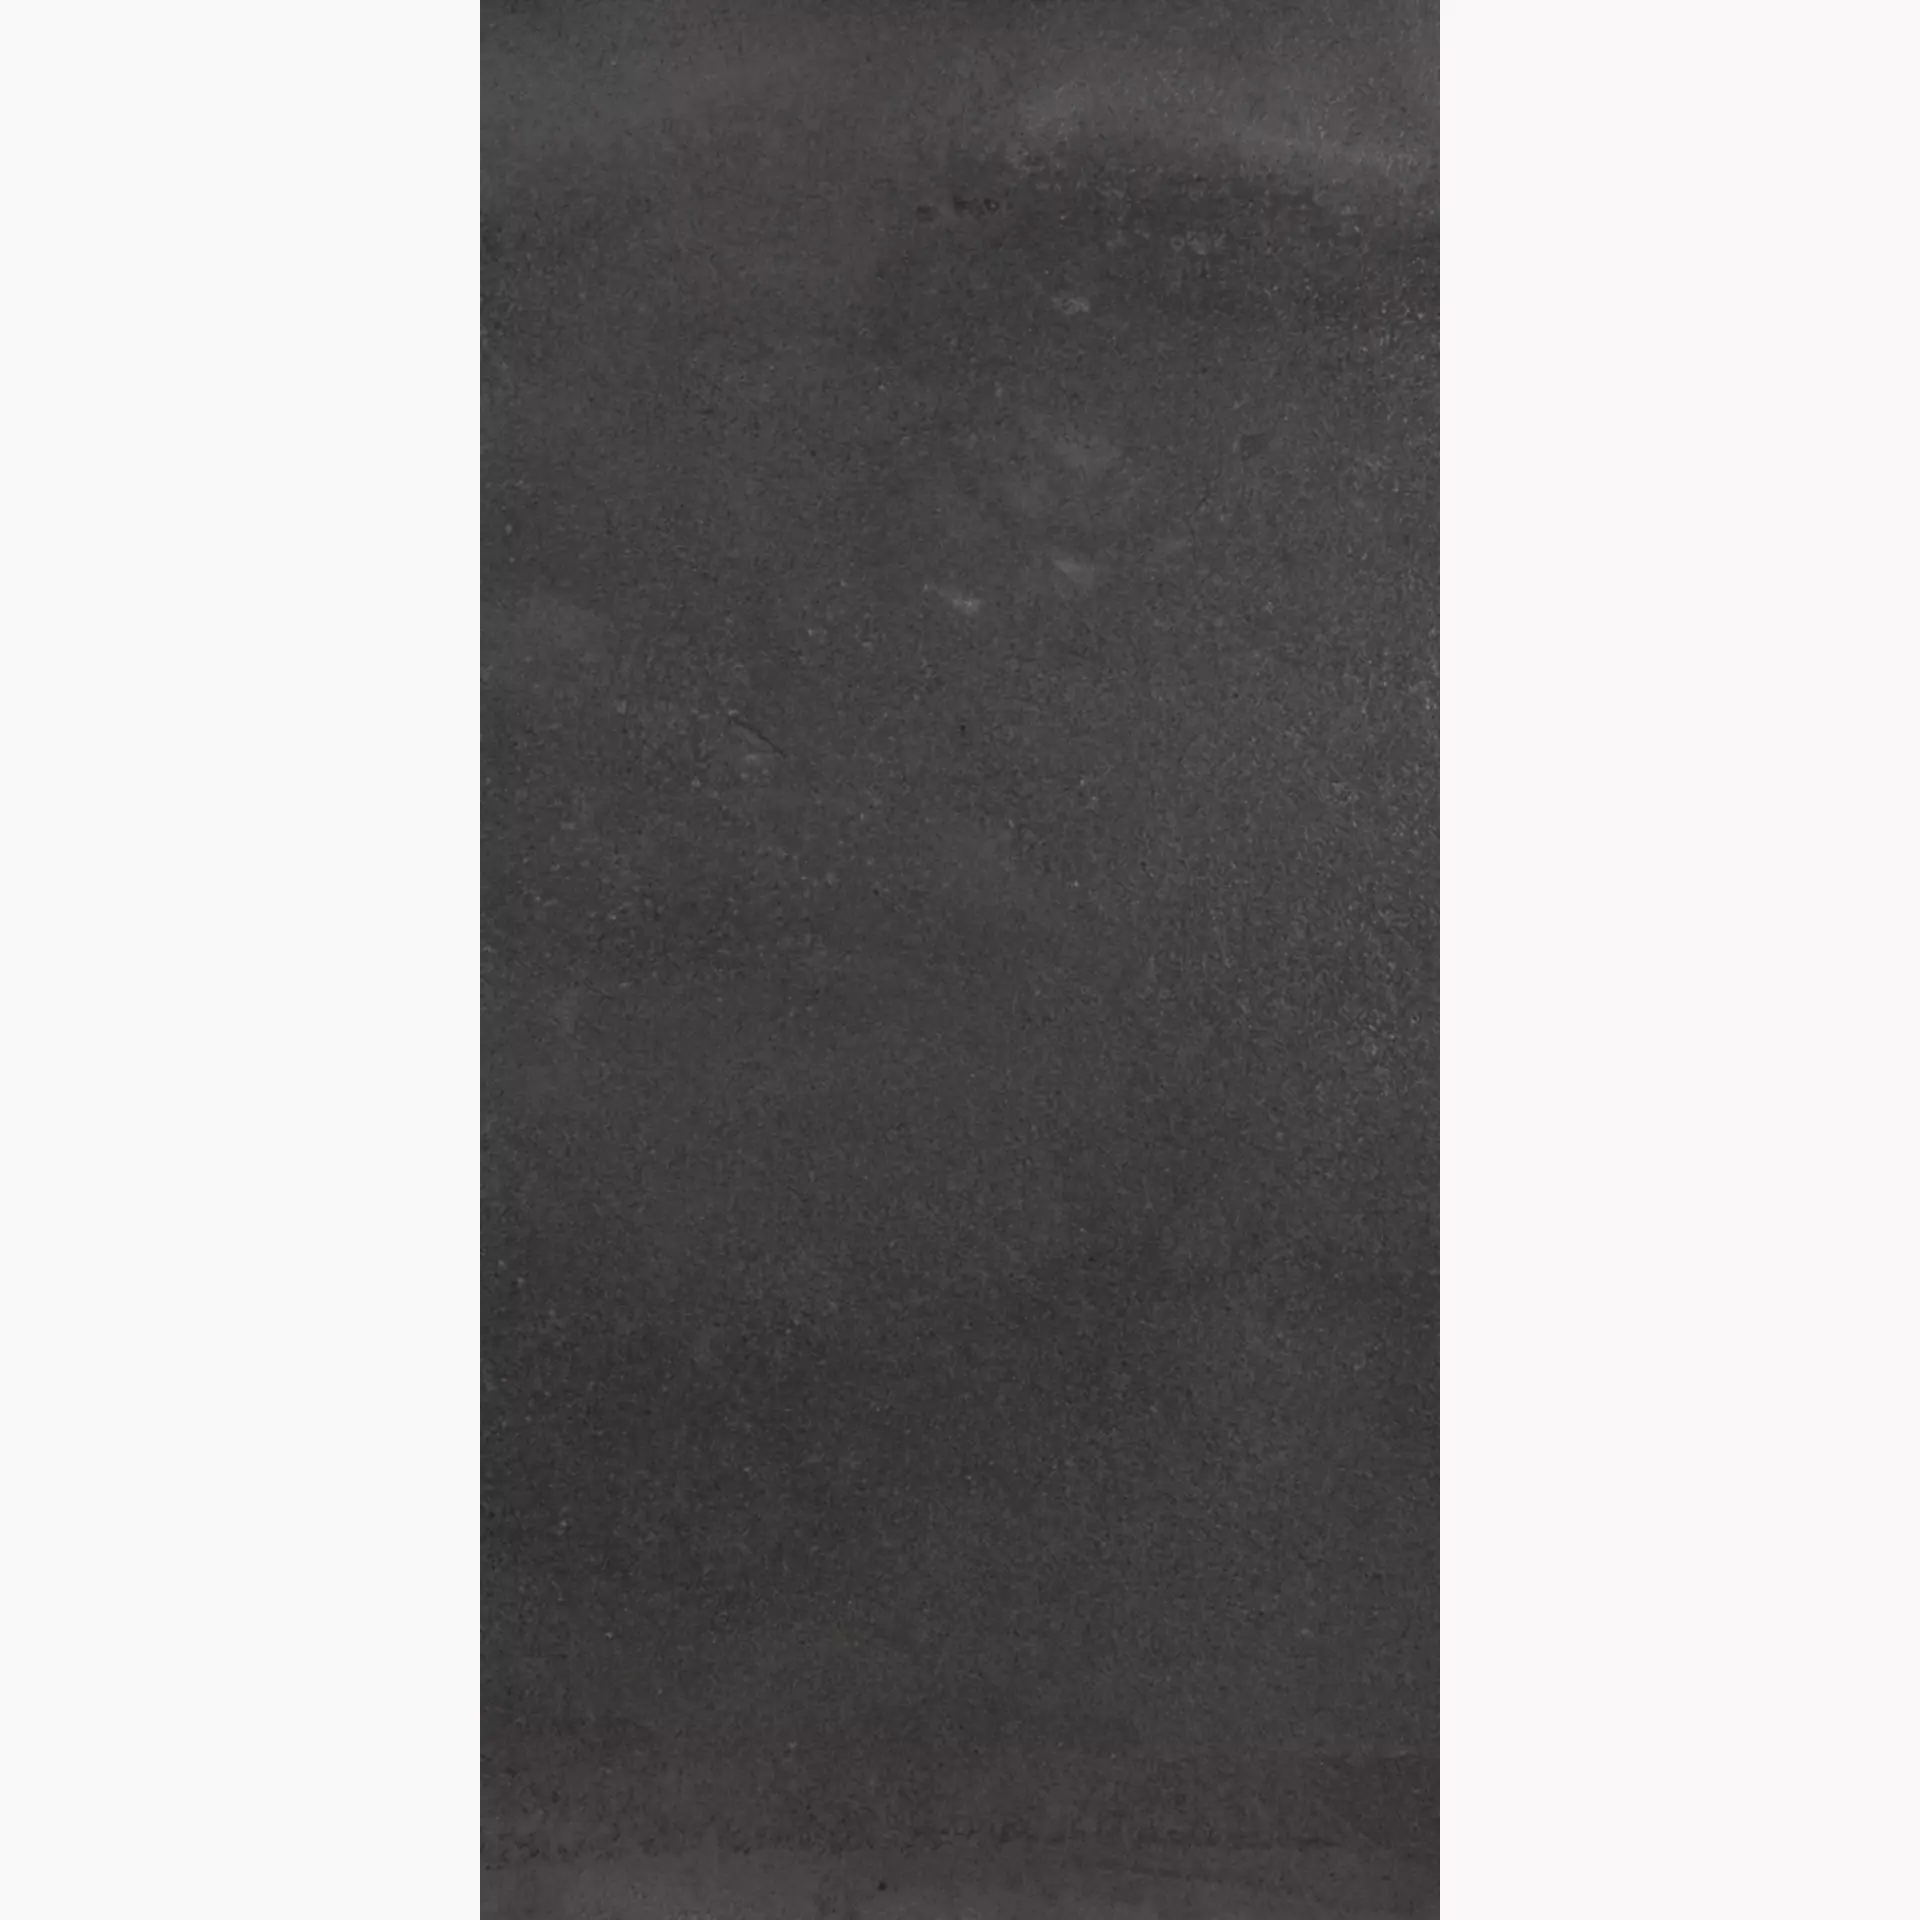 La Faenza Cottofaenza Black Natural Slate Cut Matt 155243 45x90cm rectified 10mm - COTTOFAENZA49N